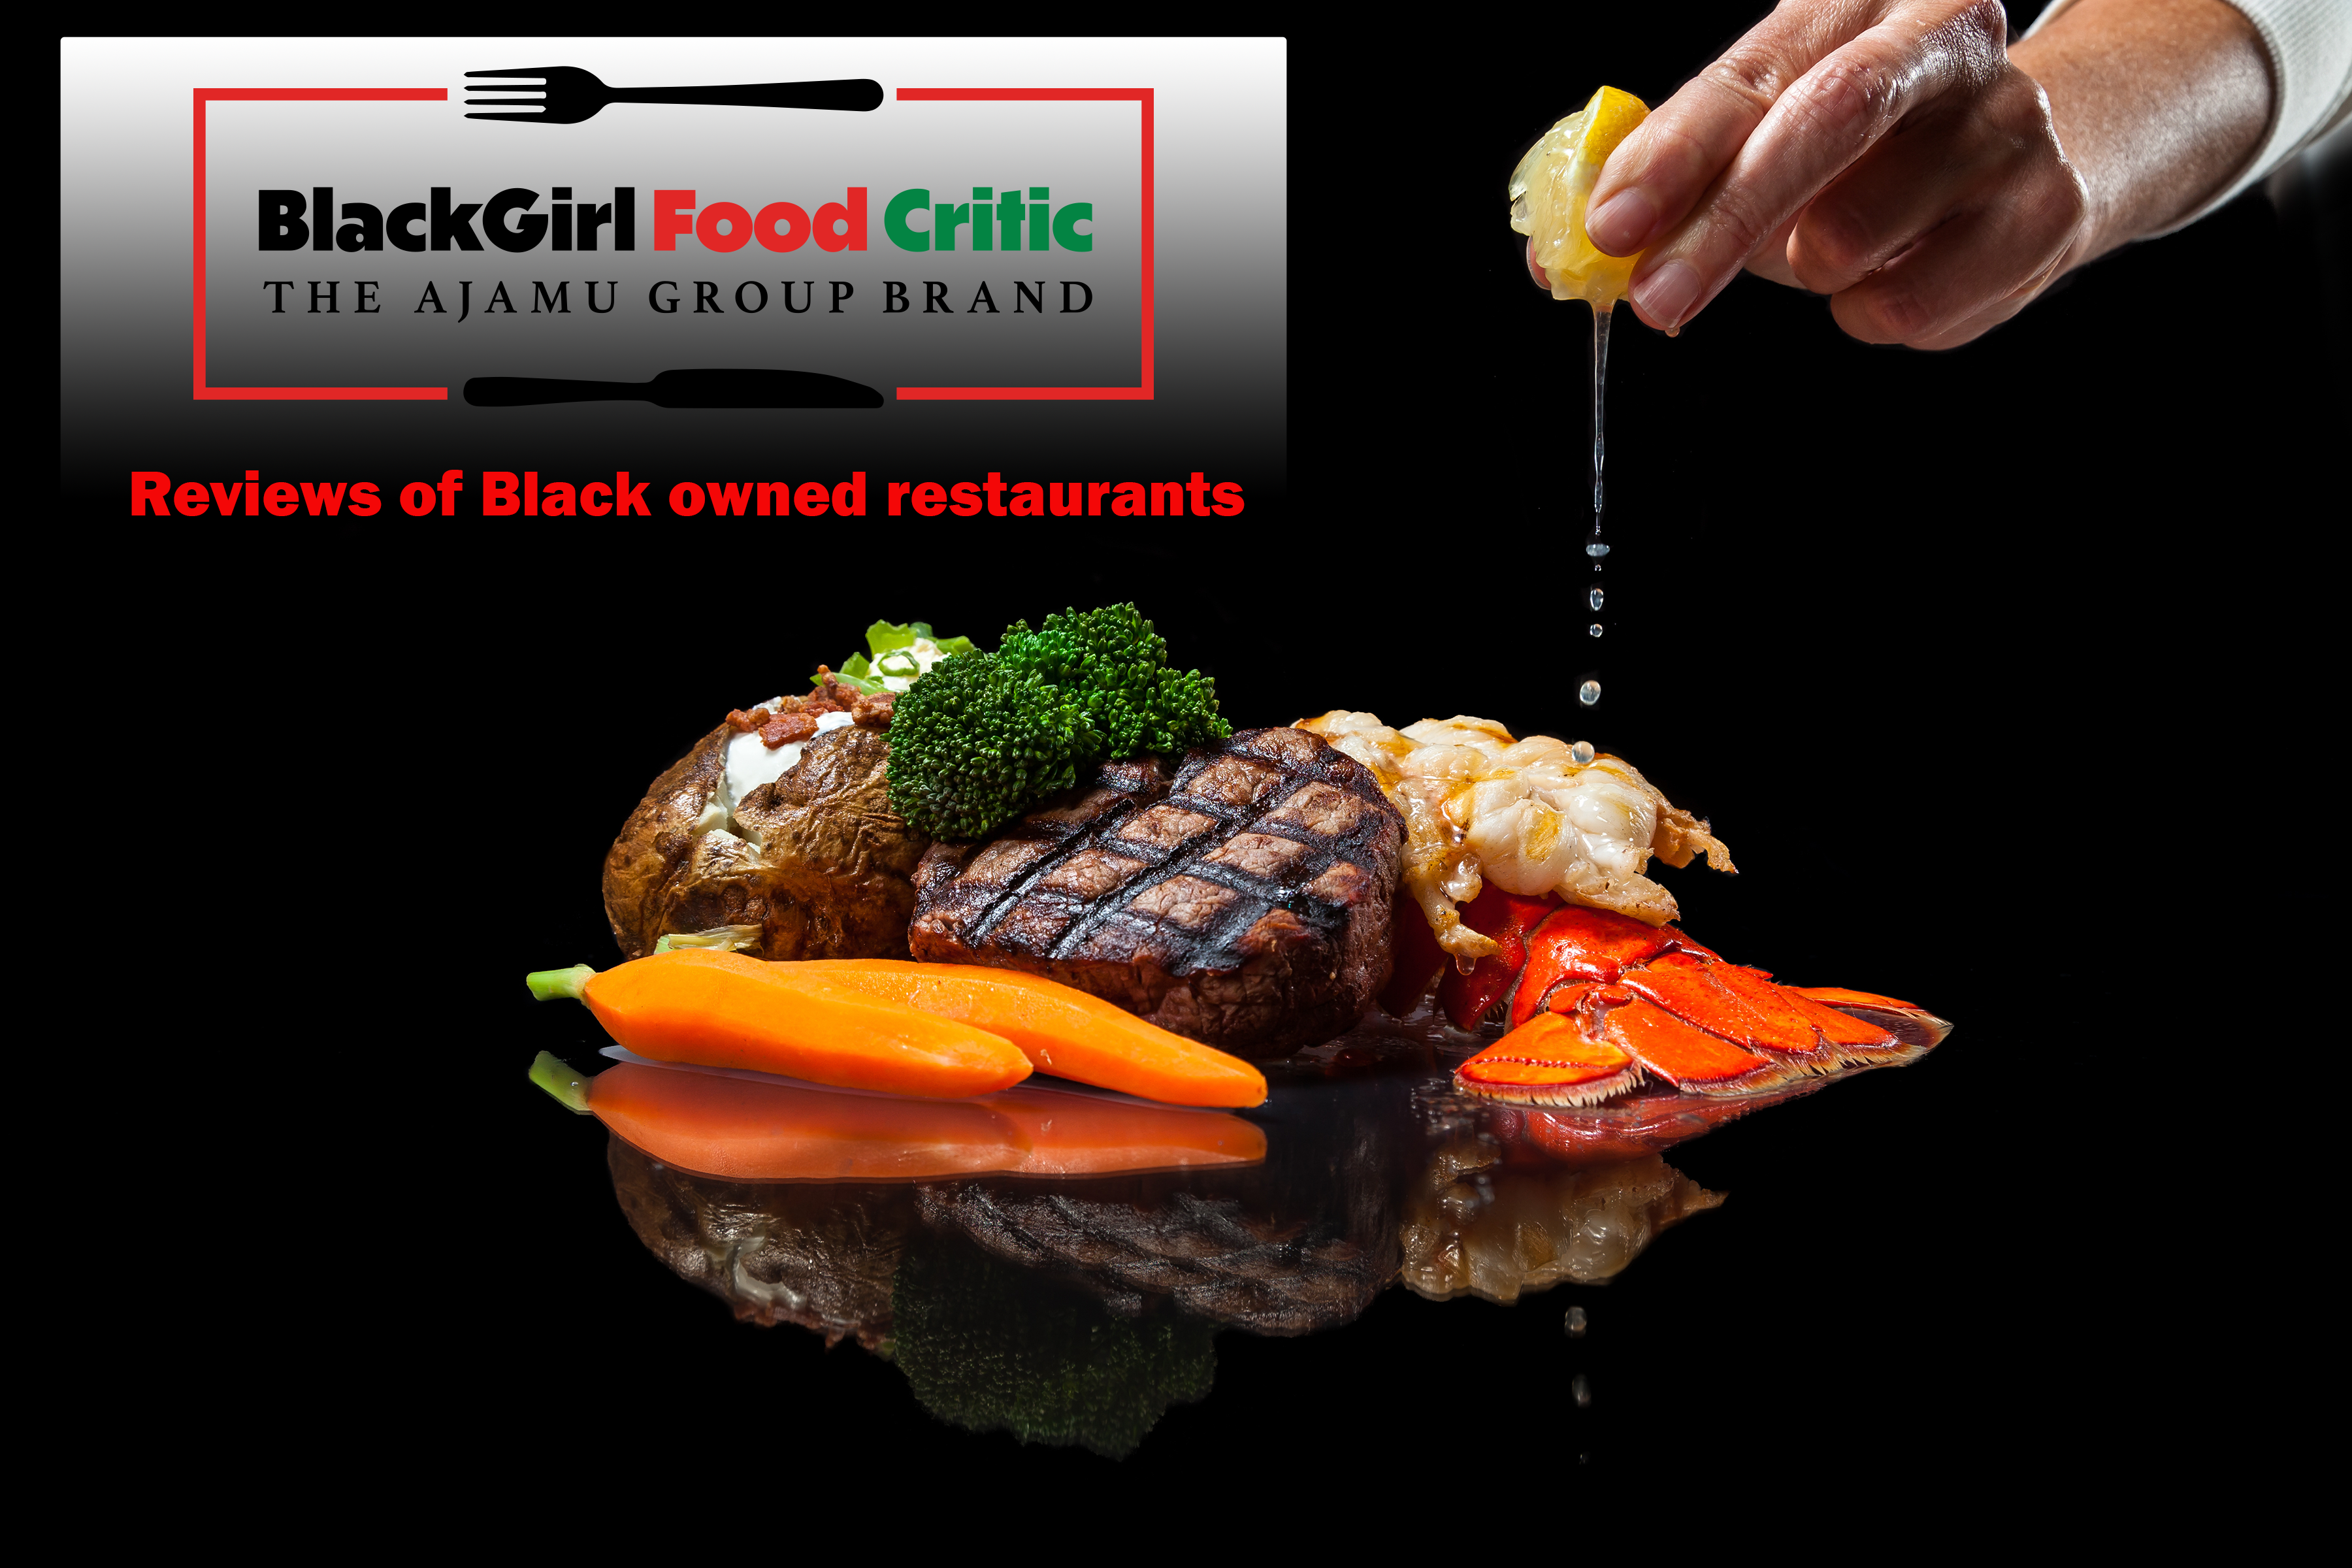 BlackGirl Food Critic – The Ajamu Group Brand